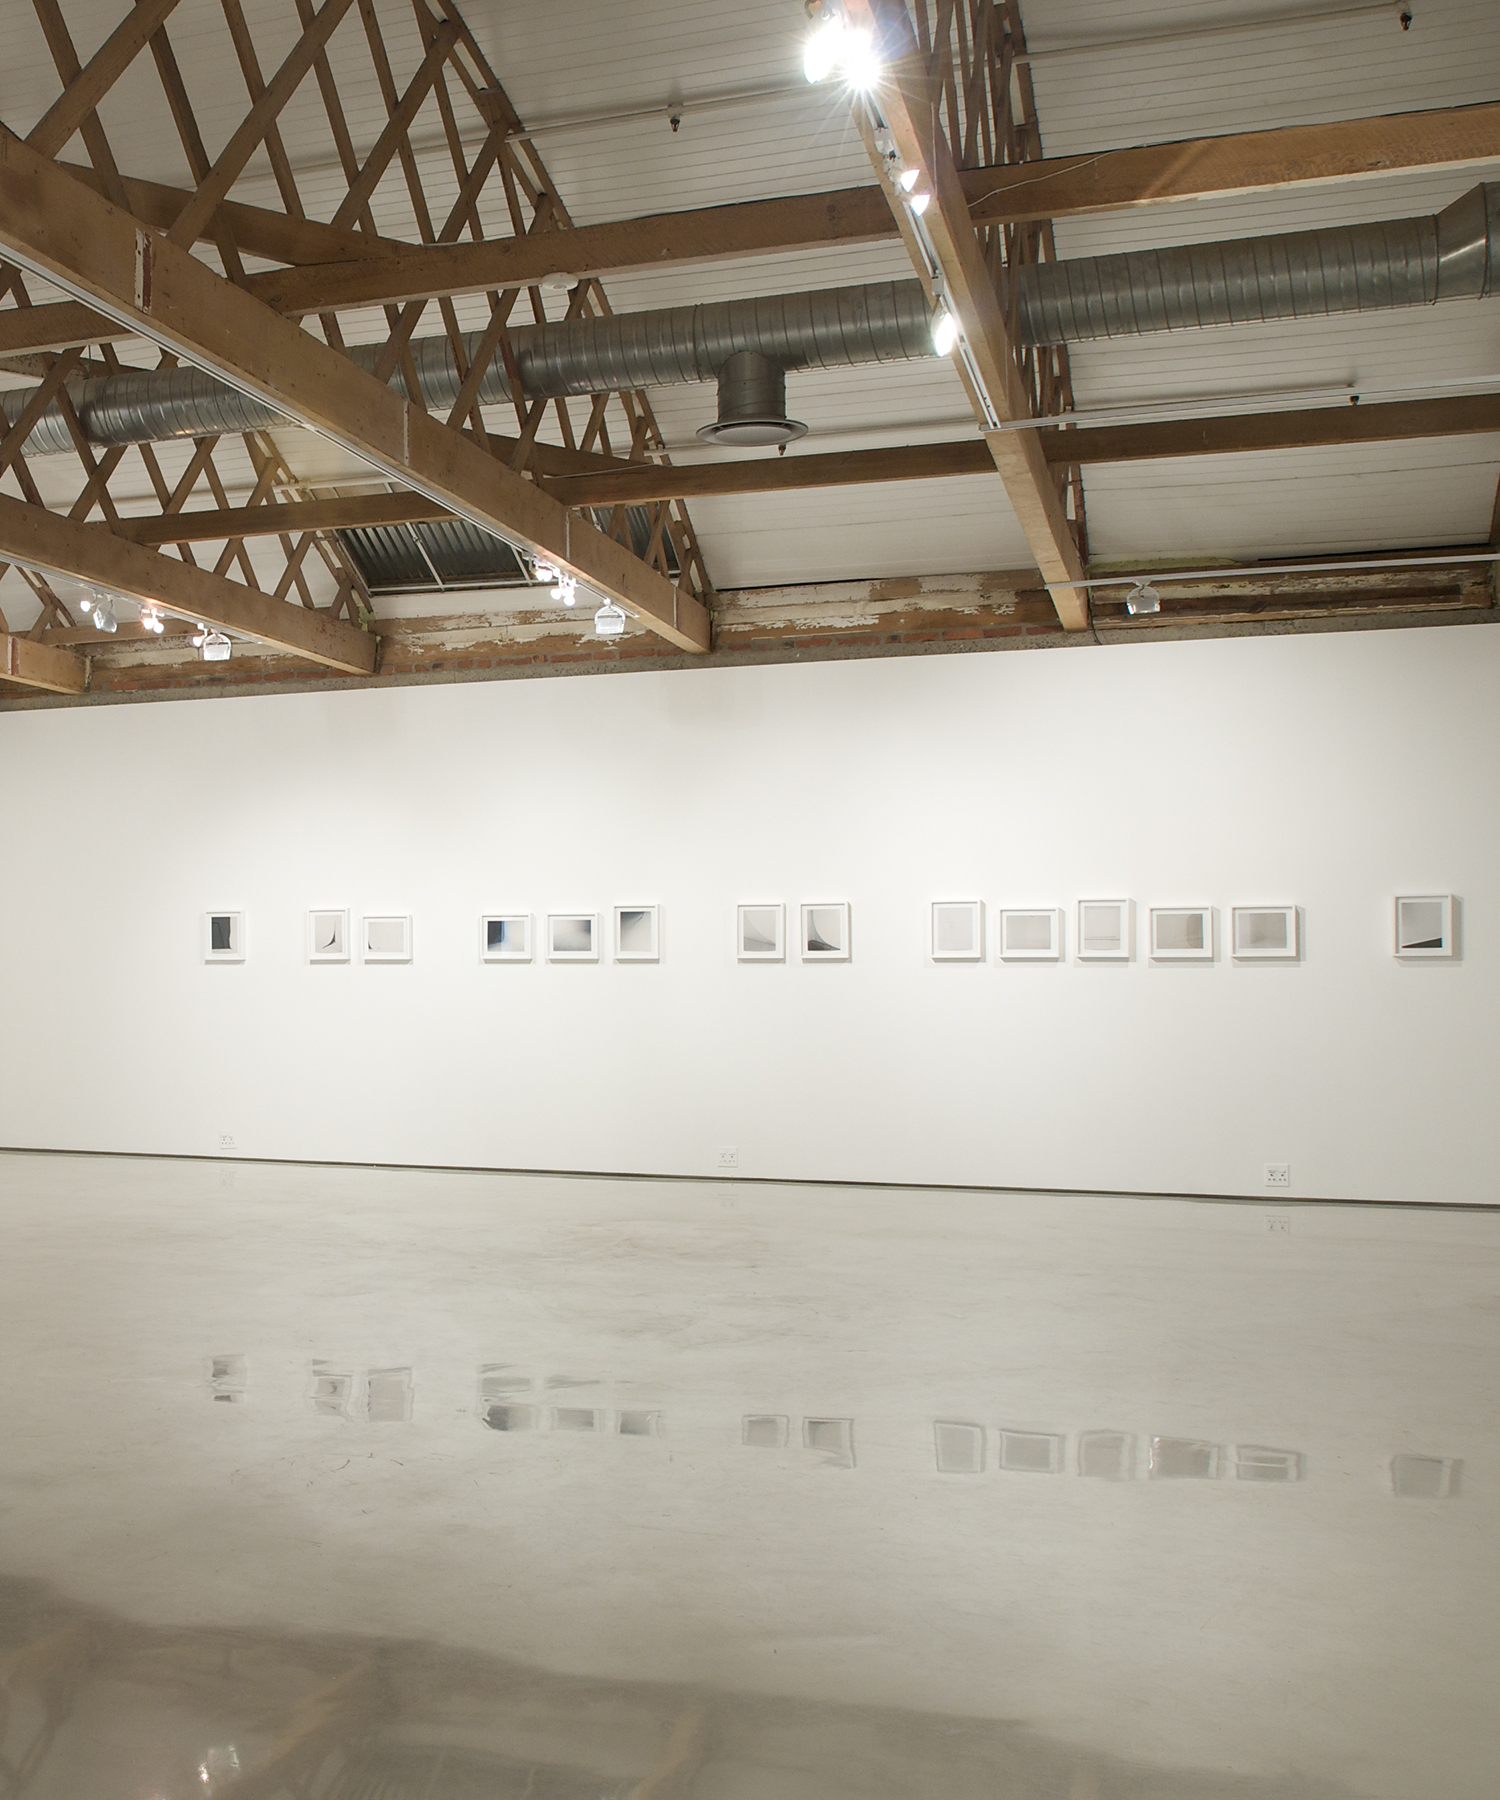  Ficciones, Goodman Gallery, Cape Town (2009)&nbsp; 